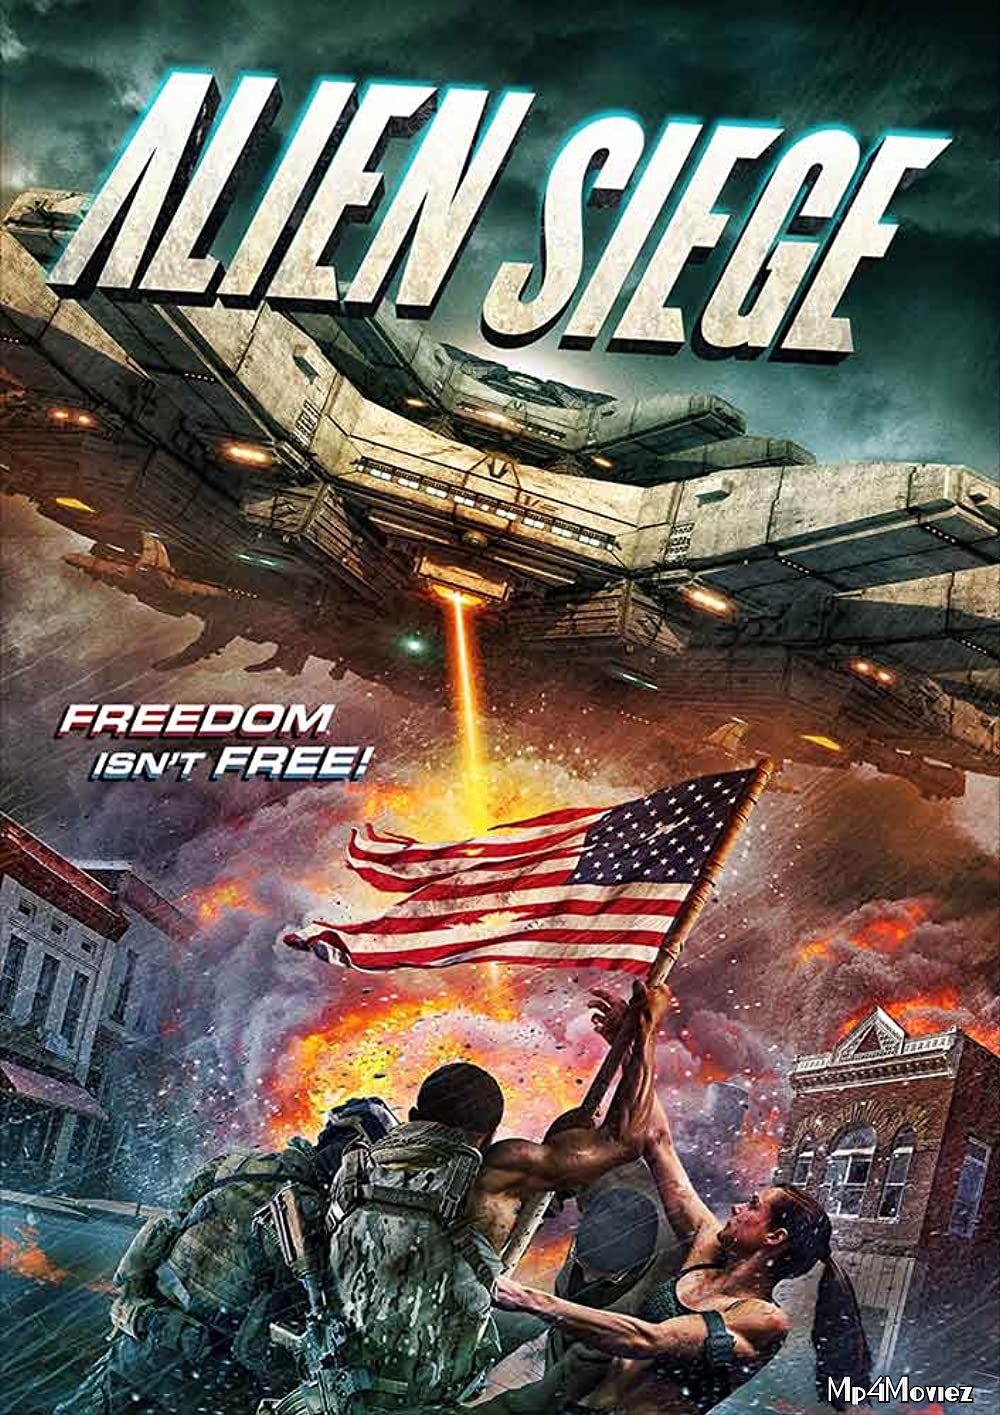 Alien Siege (2018) Hindi Dubbed BRRip download full movie